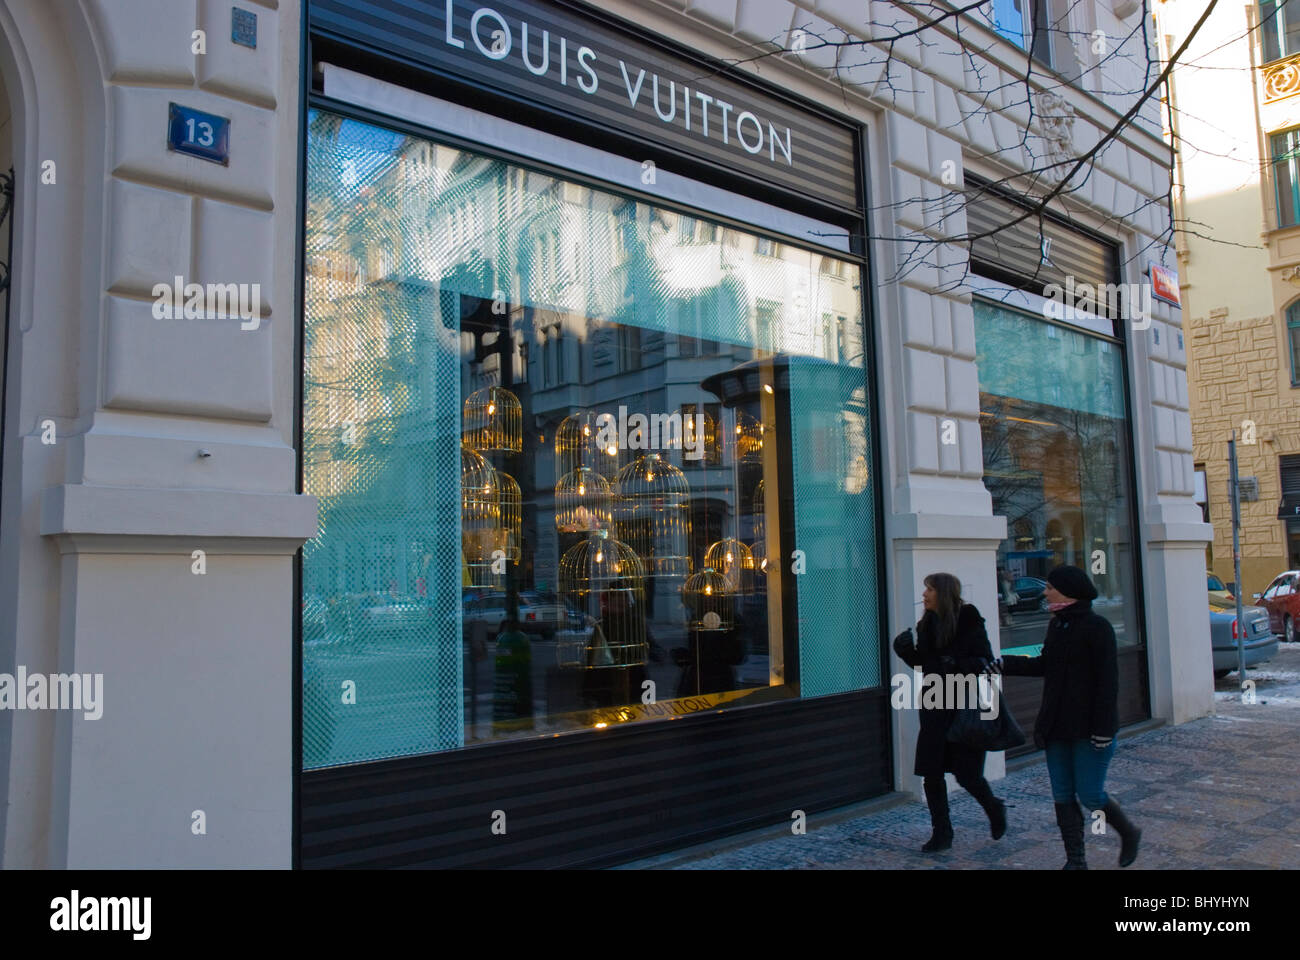 Louis Vuitton shop street Josefov central Prague Czech Republic Europe Stock Photo - Alamy